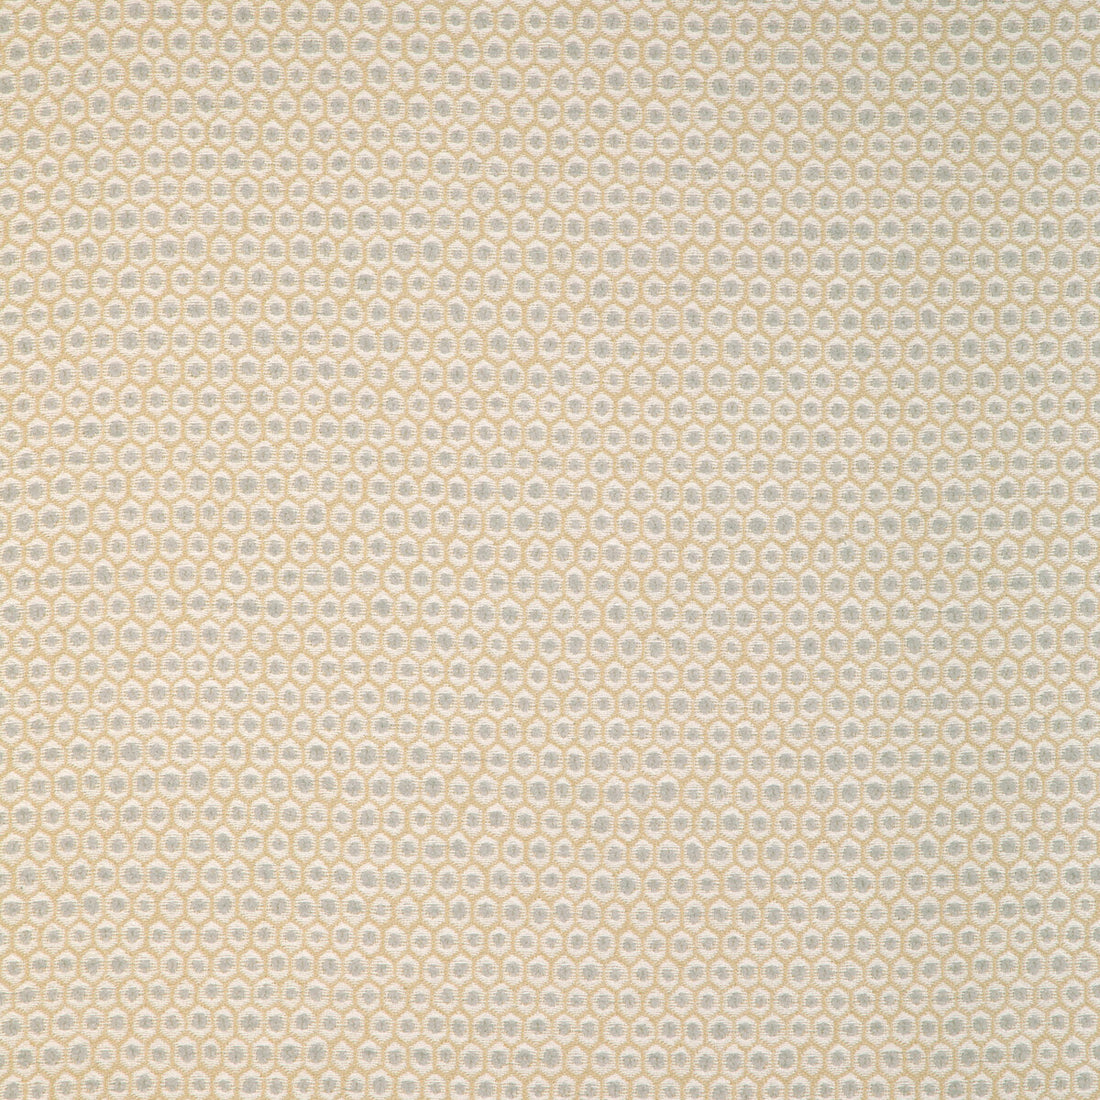 Kravet Smart fabric in 37004-1611 color - pattern 37004.1611.0 - by Kravet Smart in the Pavilion collection